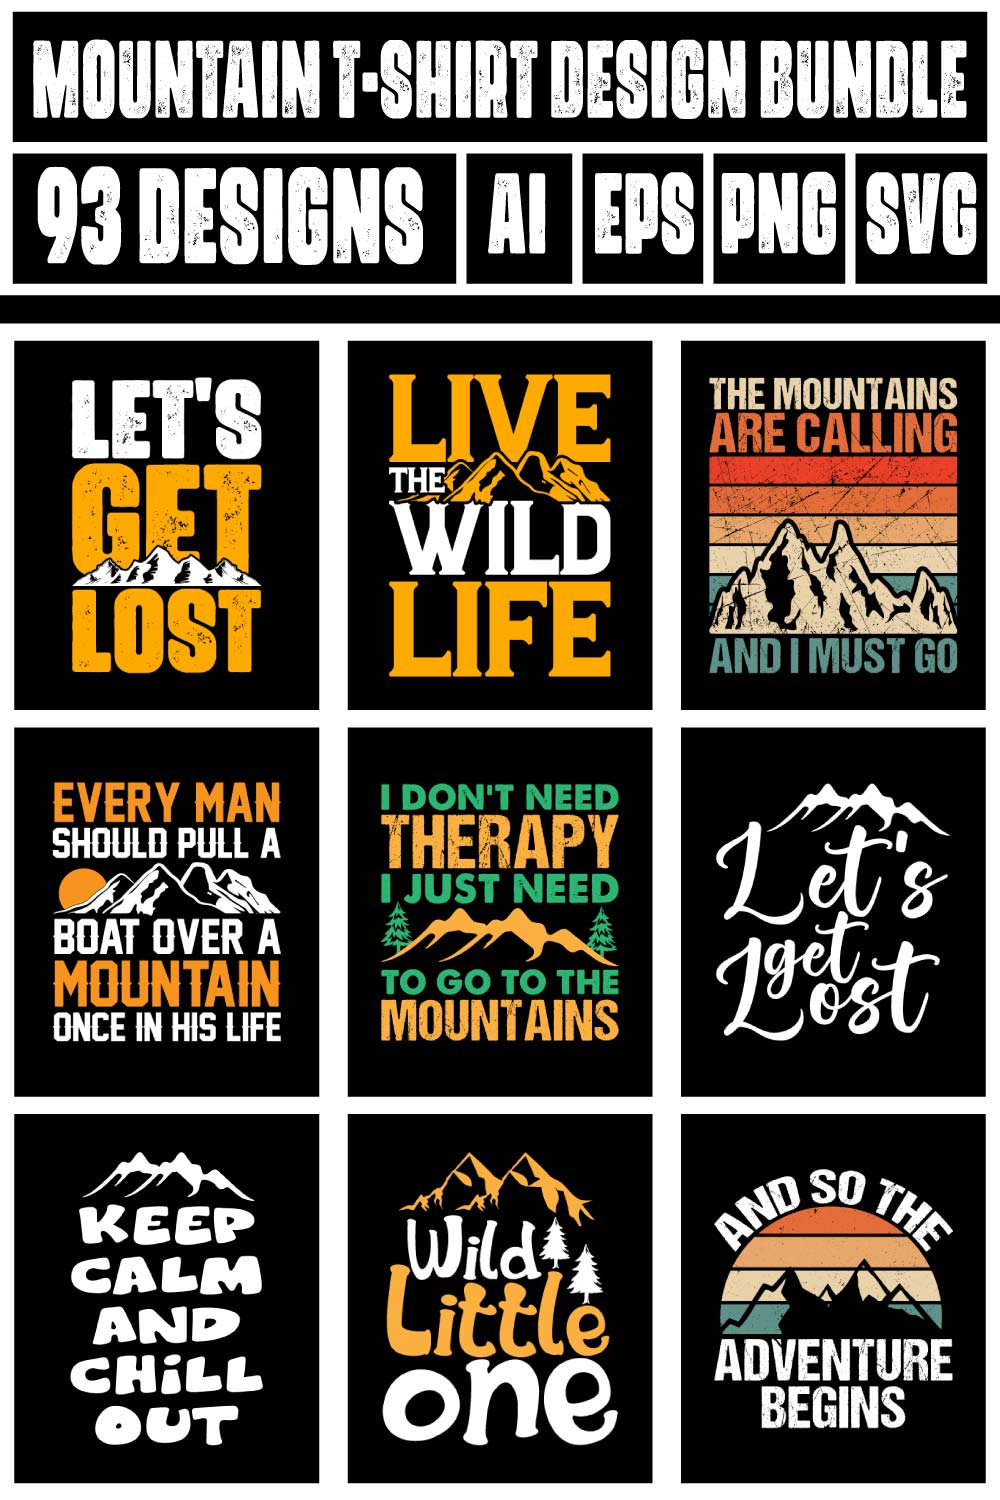 Mountain T-shirt Design Bundle 2 pinterest preview image.